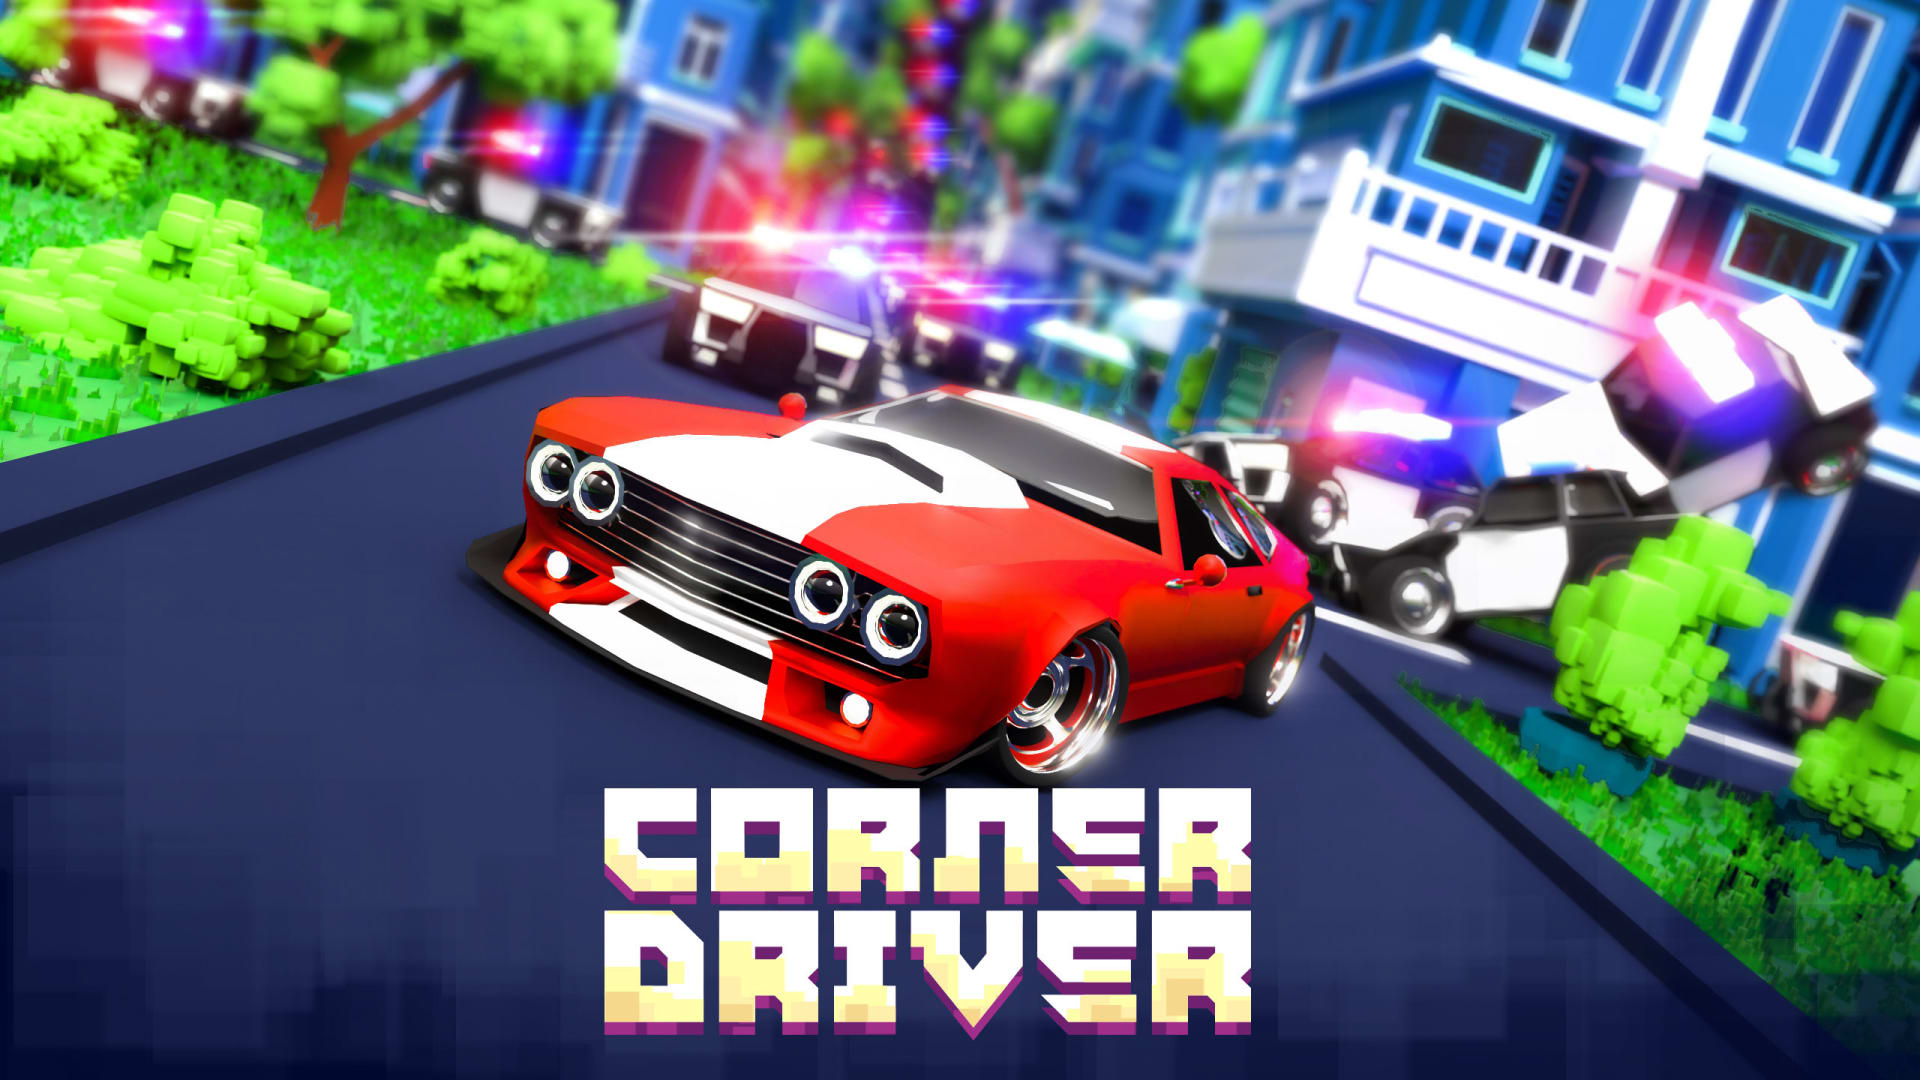 Corner Driver